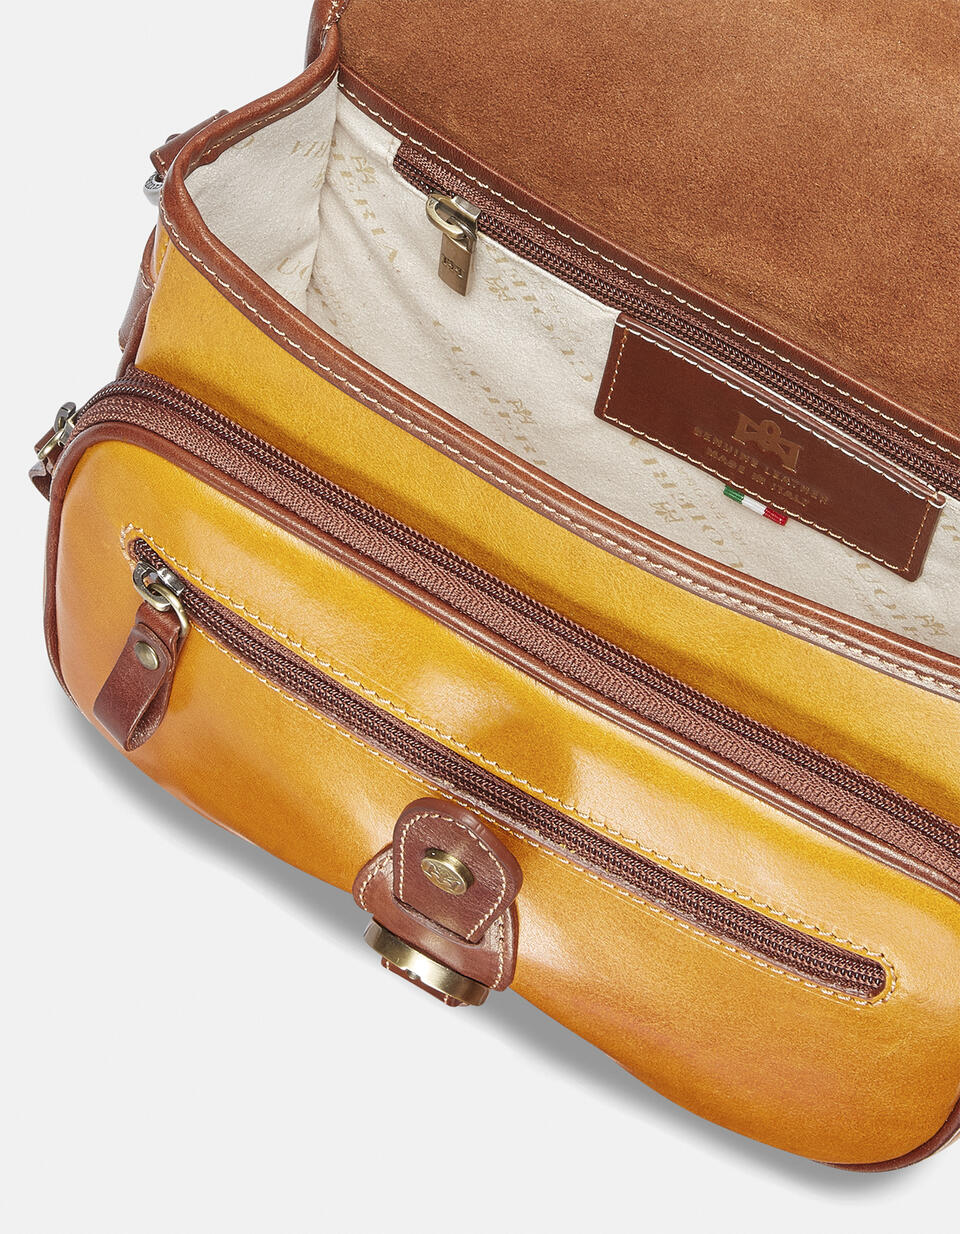 Leather Messenger bag - Messenger Bags - WOMEN'S BAGS | bags GIALLOBICOLORE - Messenger Bags - WOMEN'S BAGS | bagsCuoieria Fiorentina